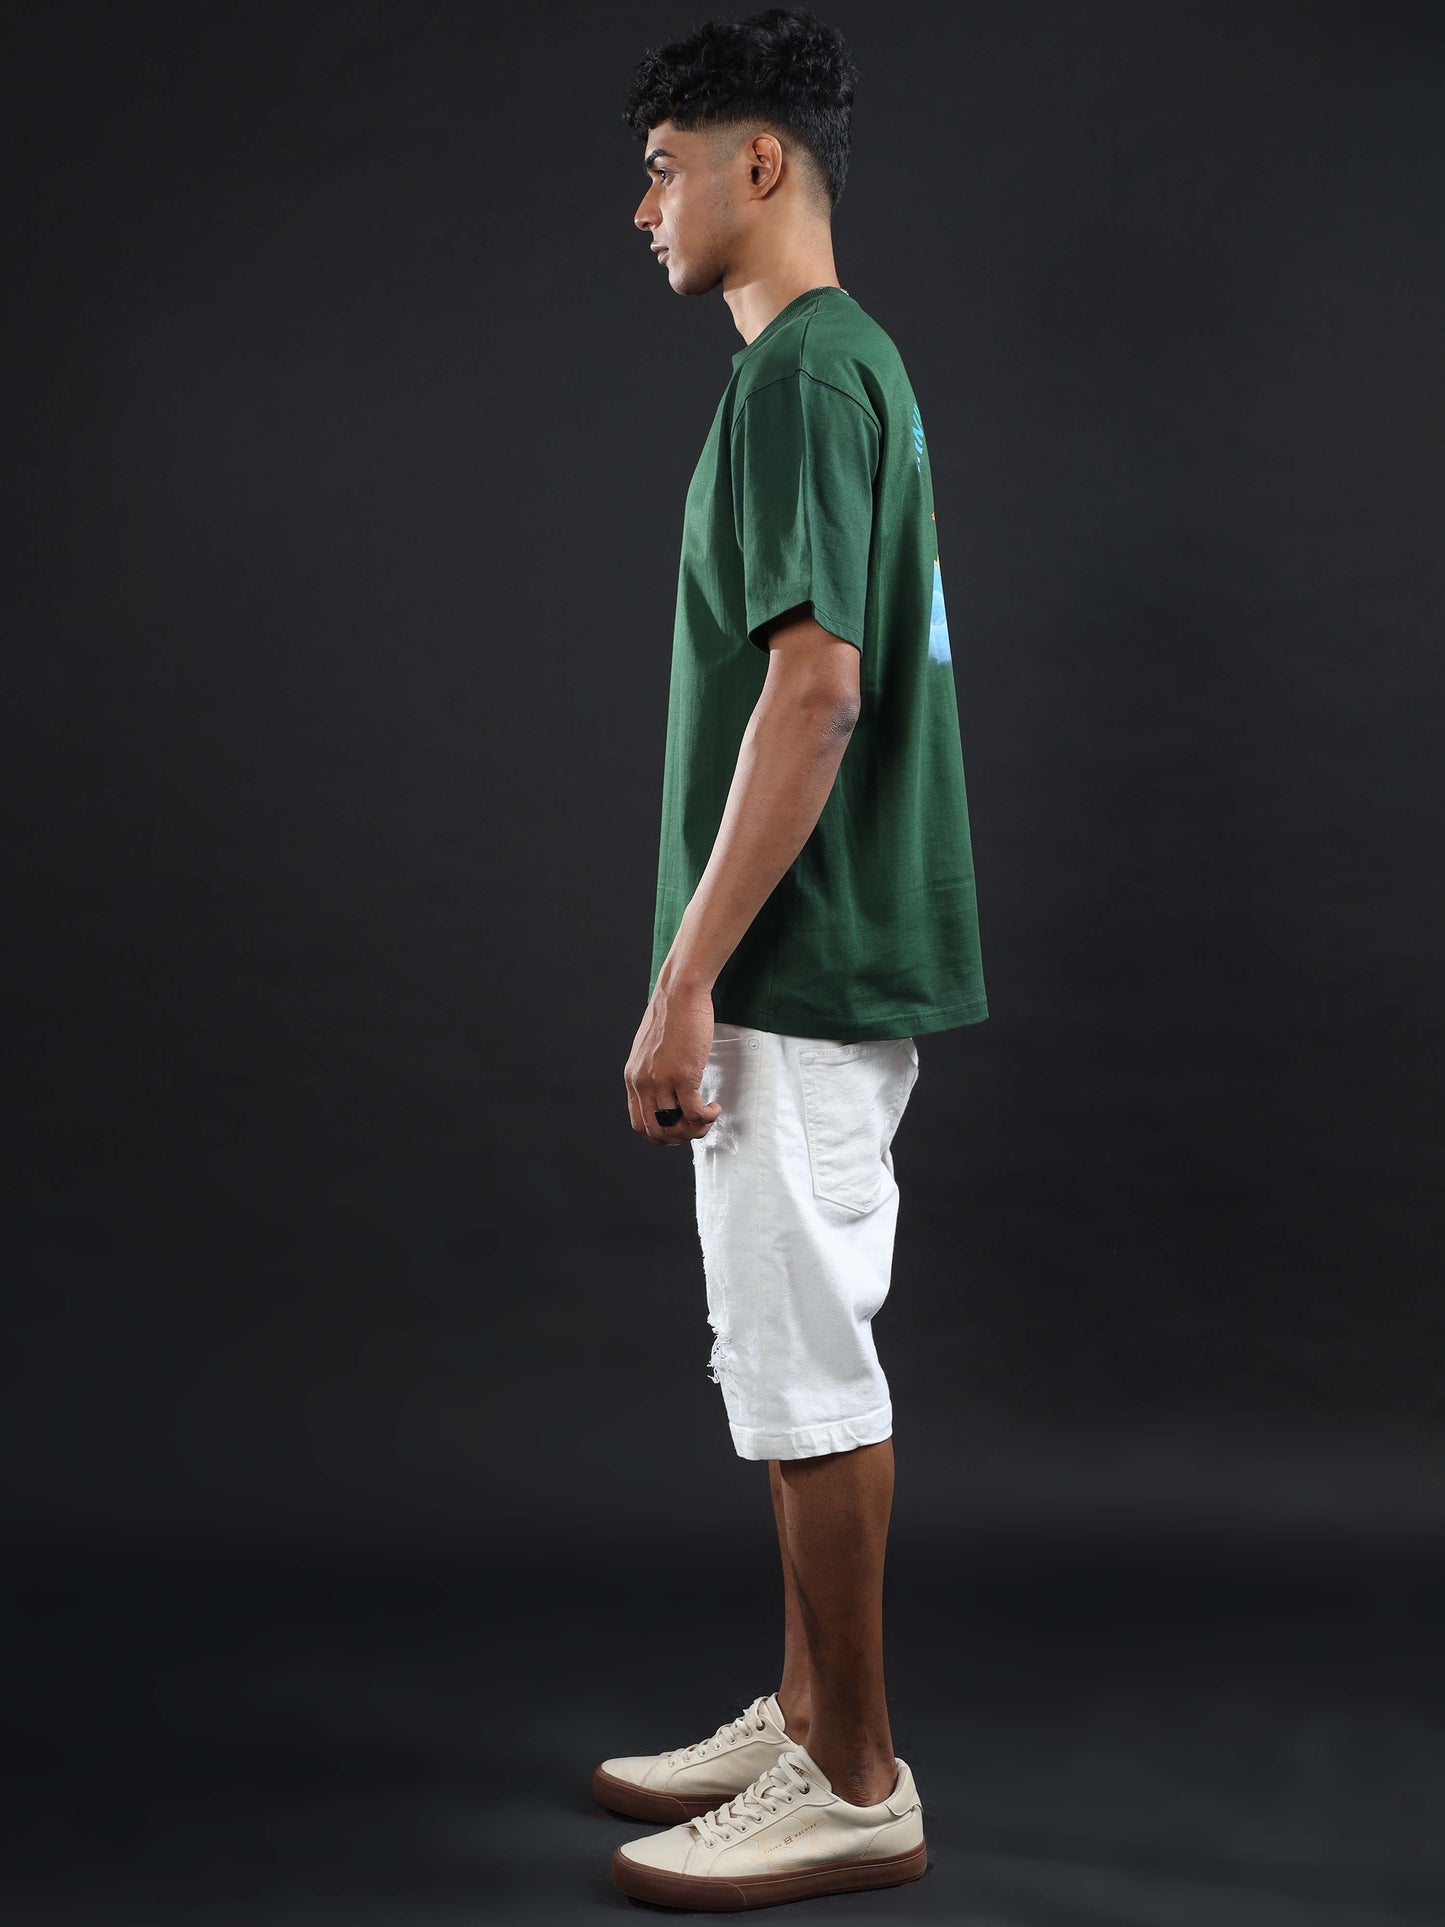 Water Printed Unisex Green Drop Shoulder T Shirt